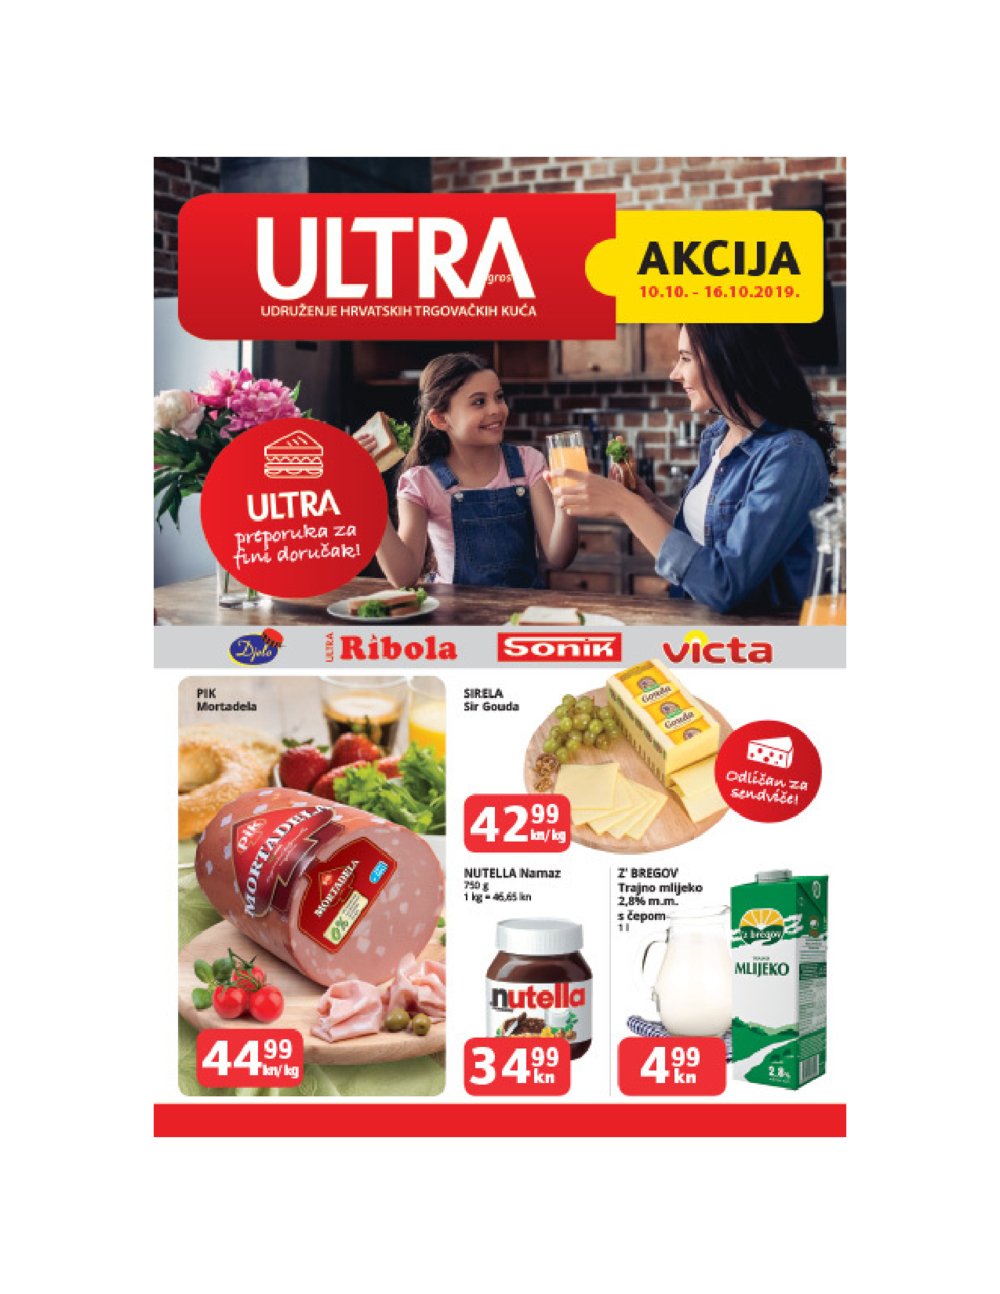 Ultra Gros katalog Akcija 10.10.-16.10.2019